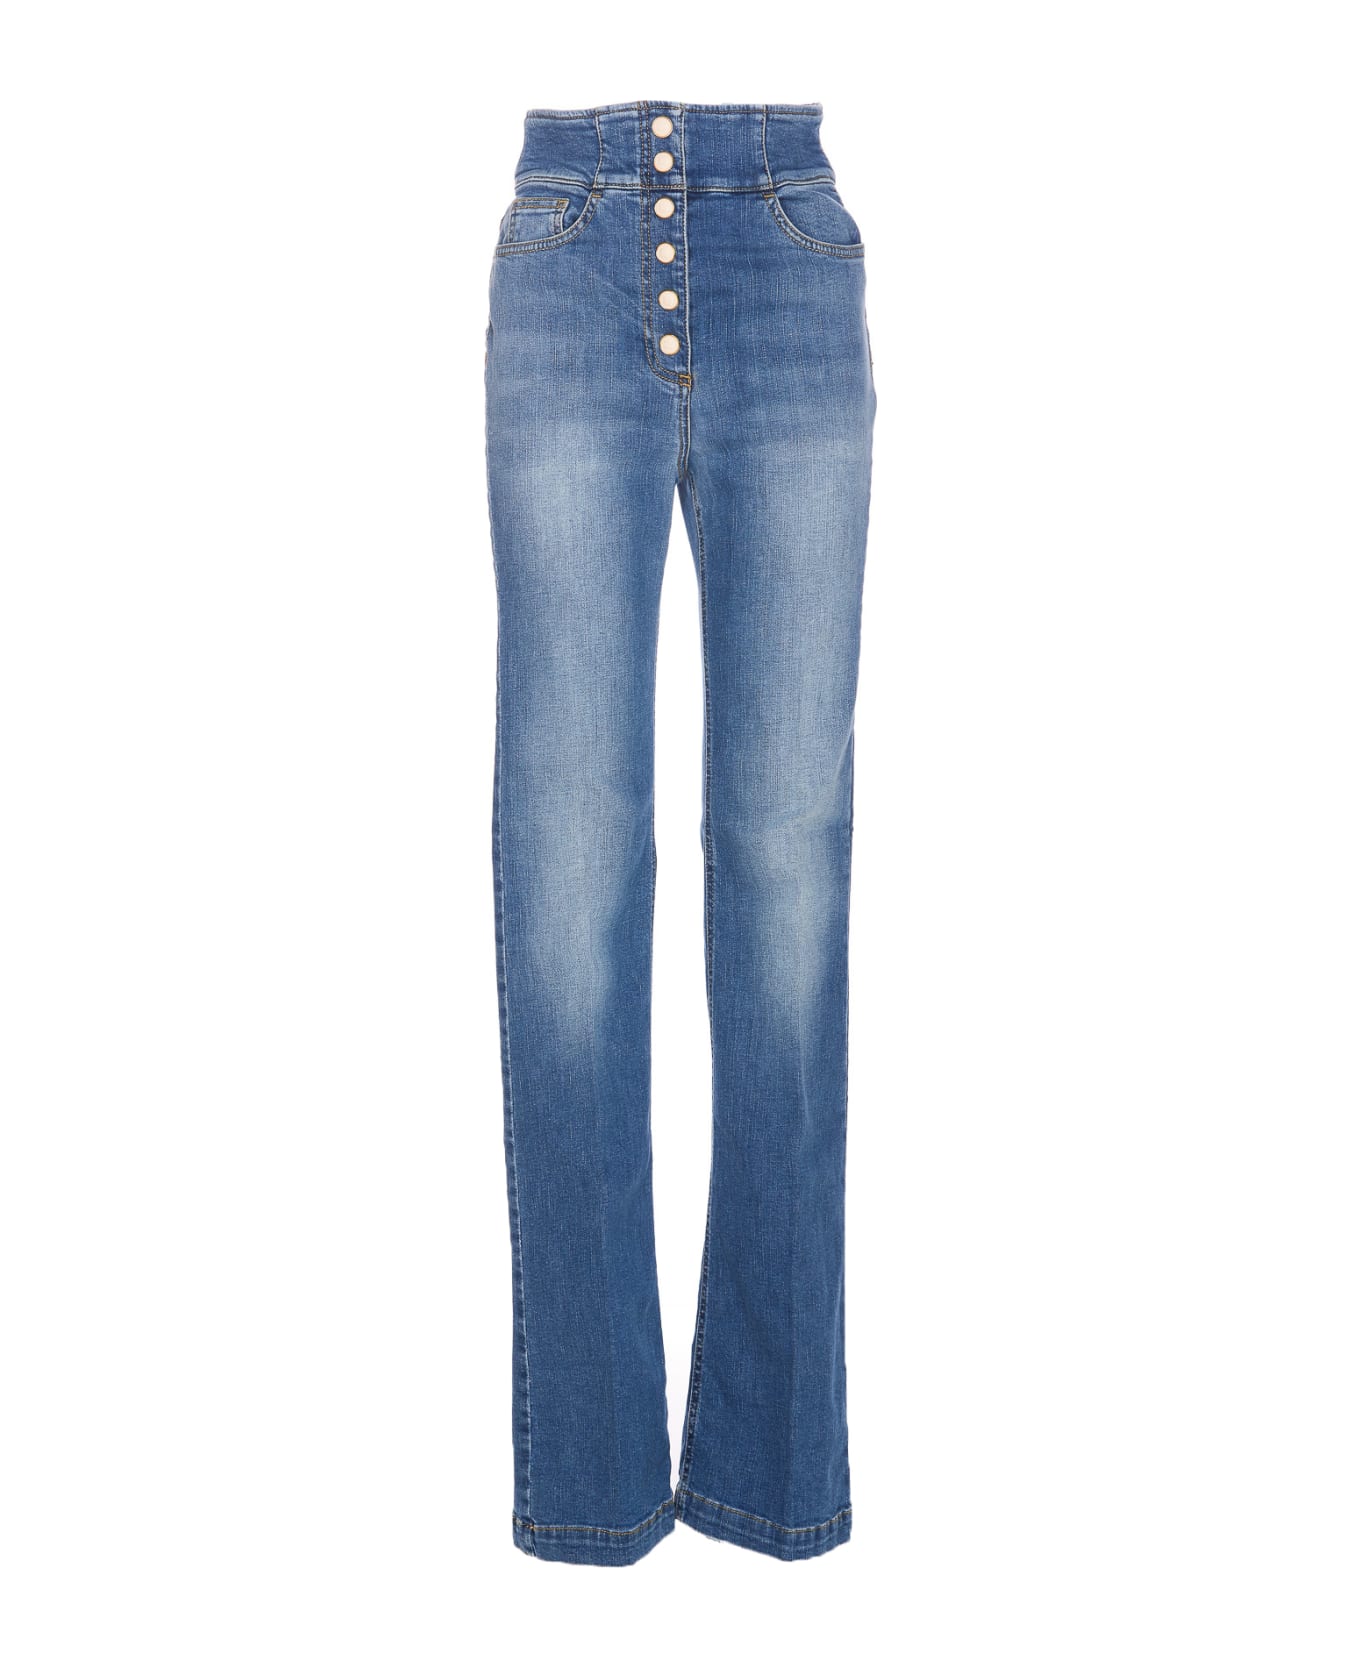 Elisabetta Franchi Jeans - BLUE VINTAGE